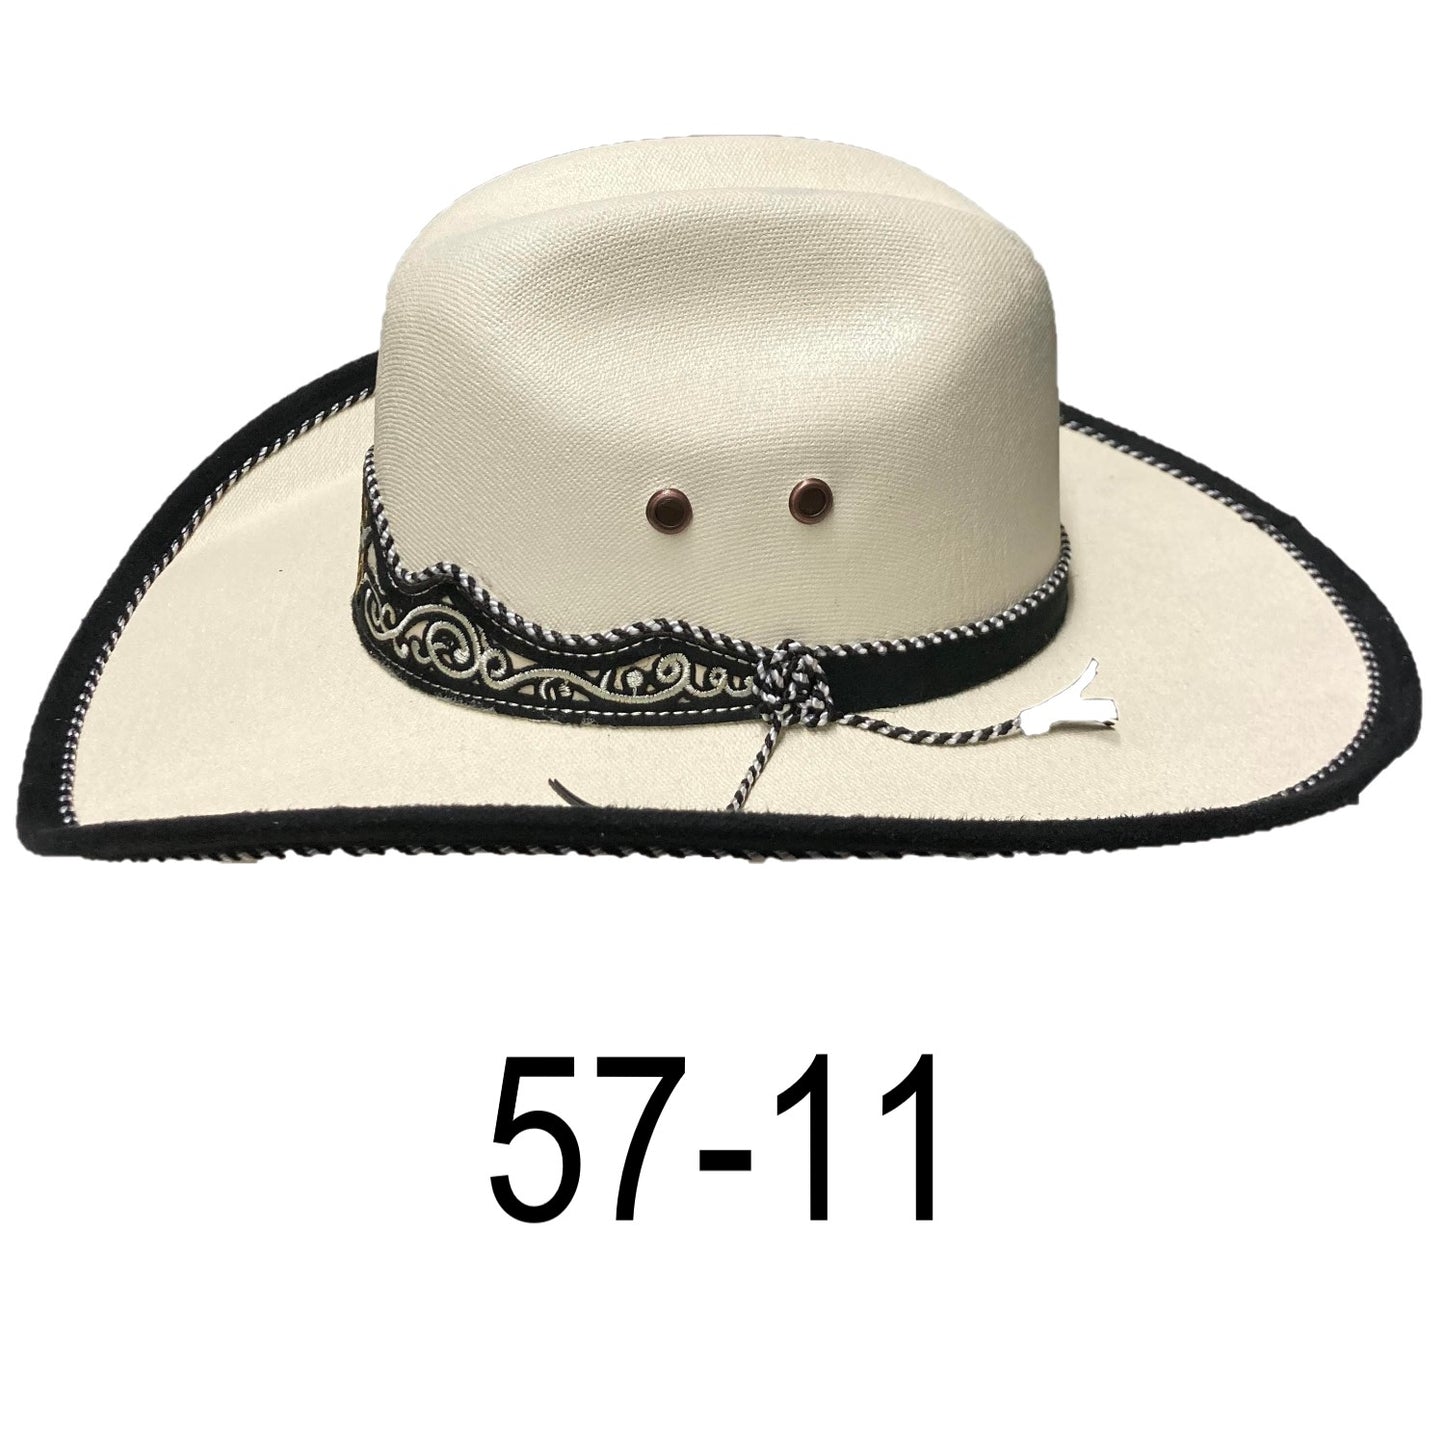 Black Beige Authentic Sahuayo Region Mexico Palm Moreno Straw Safari Cowboy Sun Hat